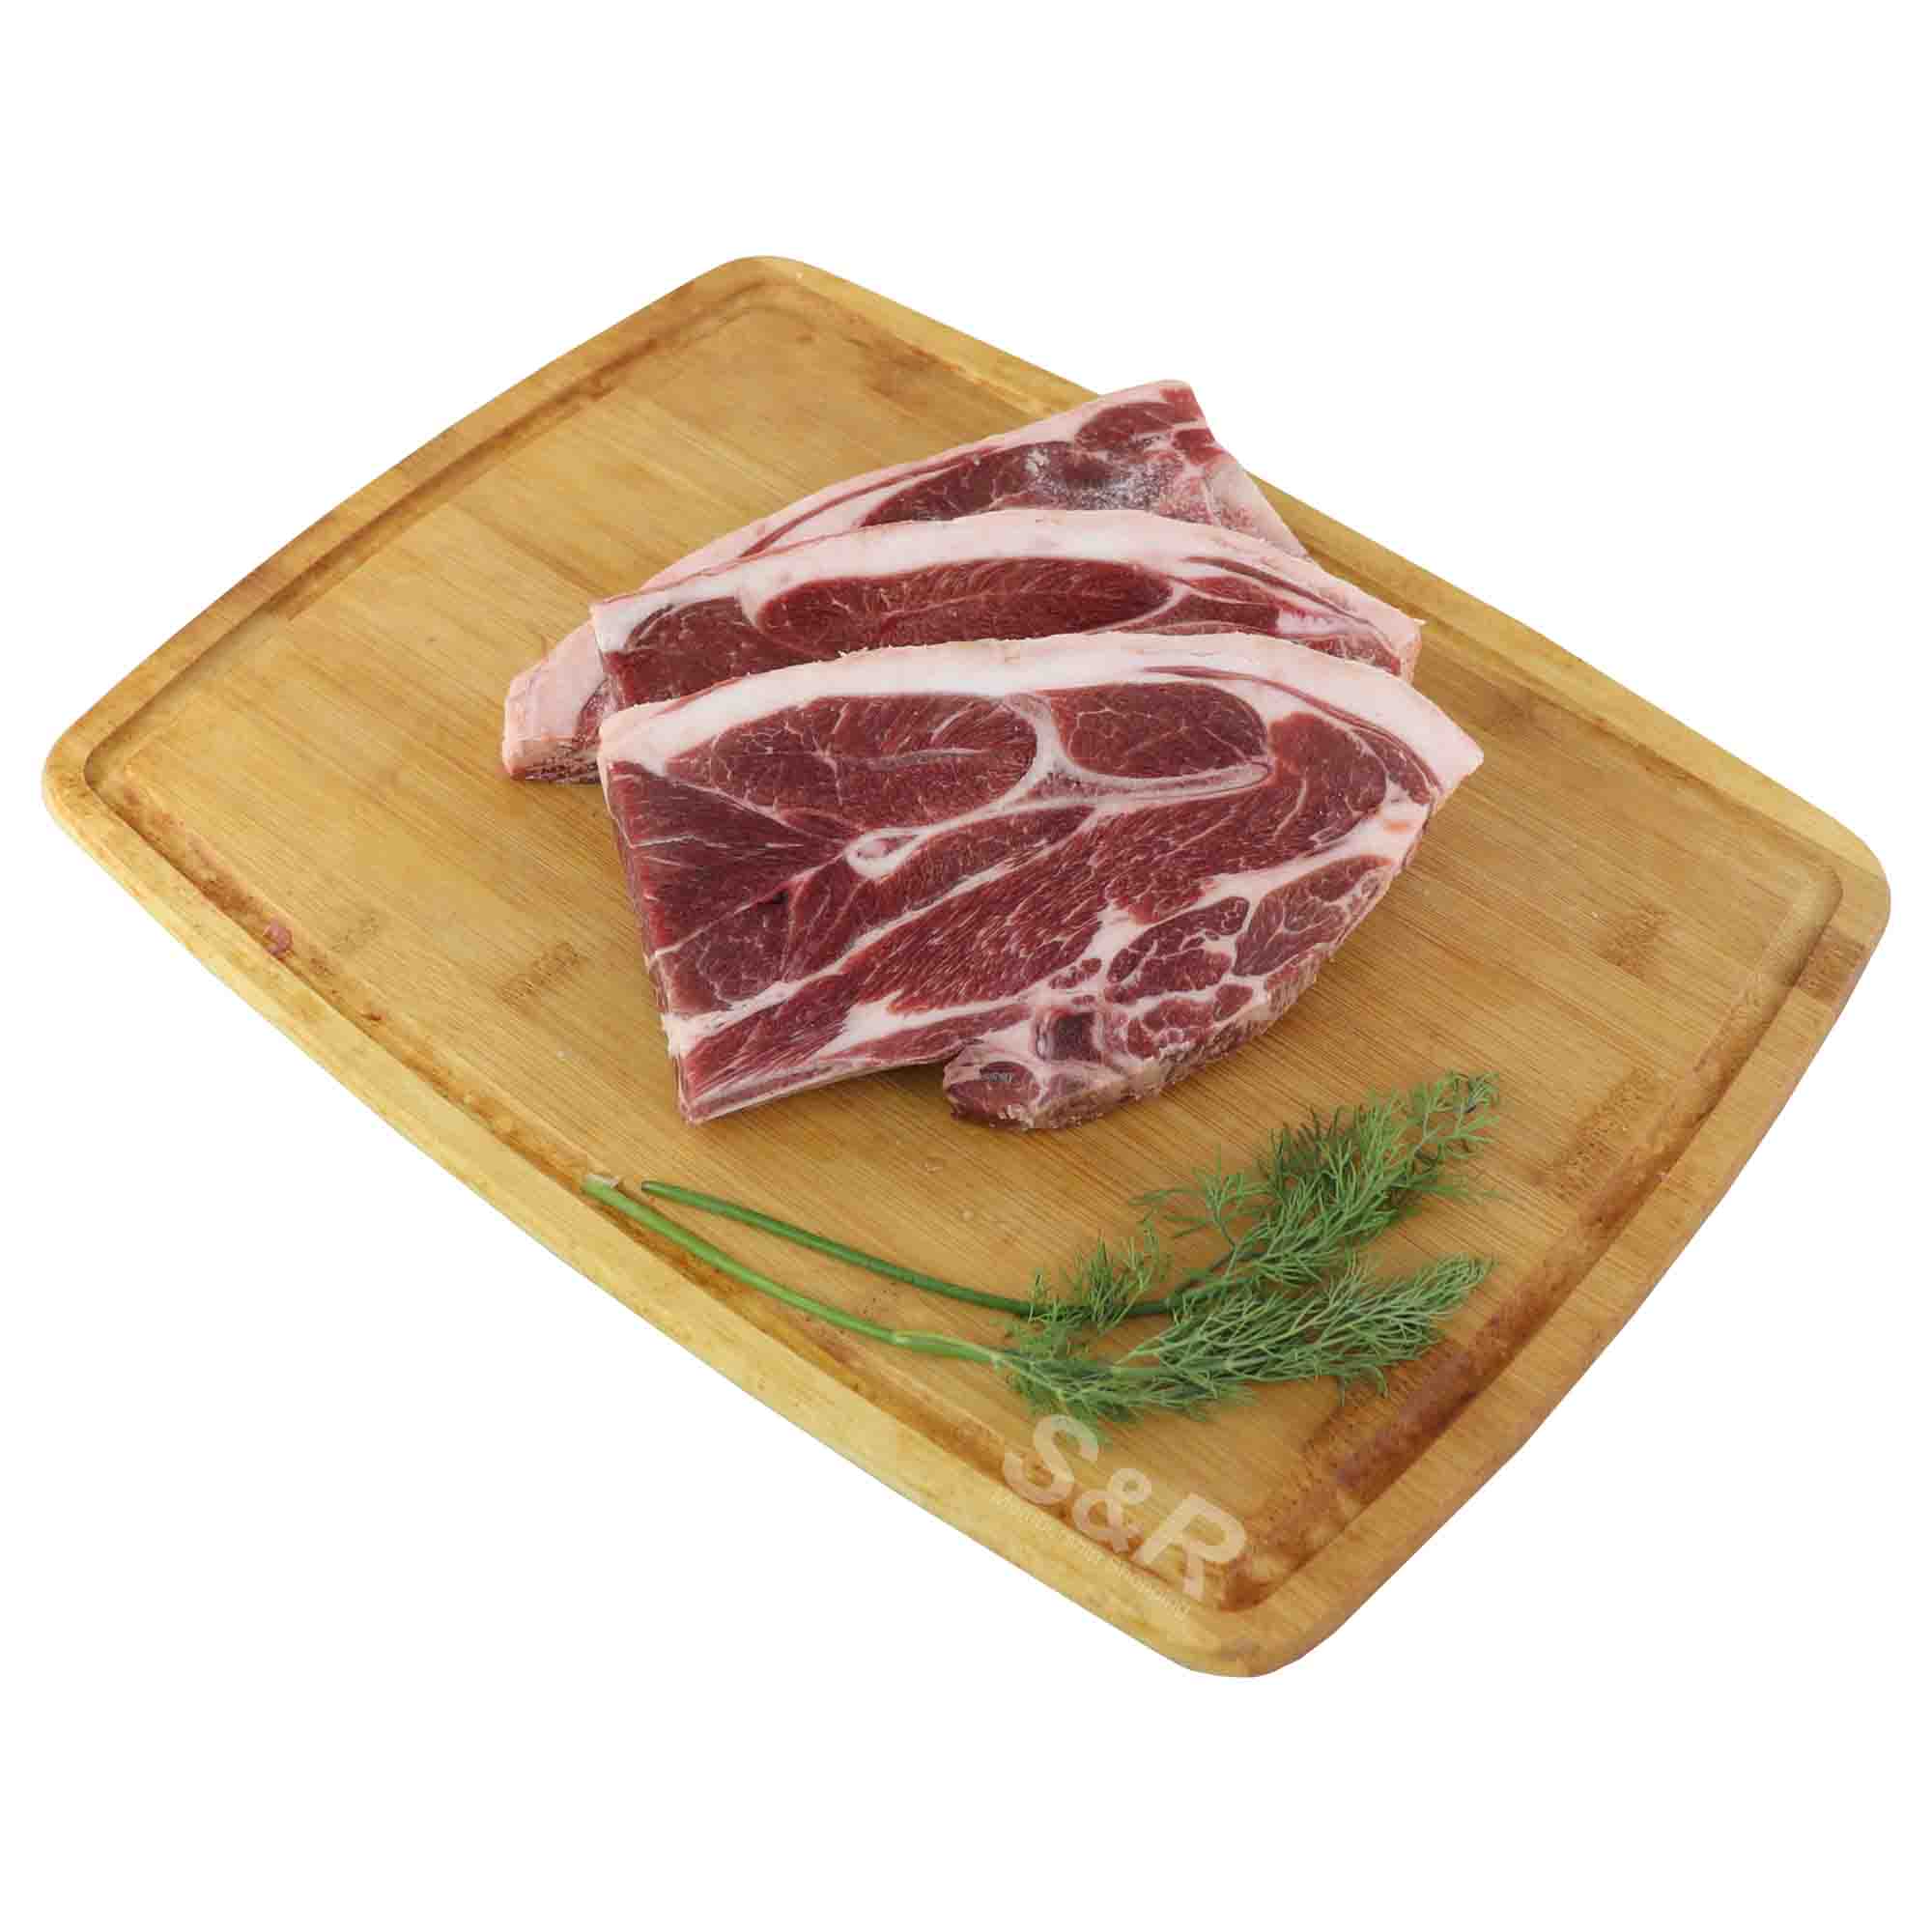 S&R Lamb Shoulder Steak approx. 2kg